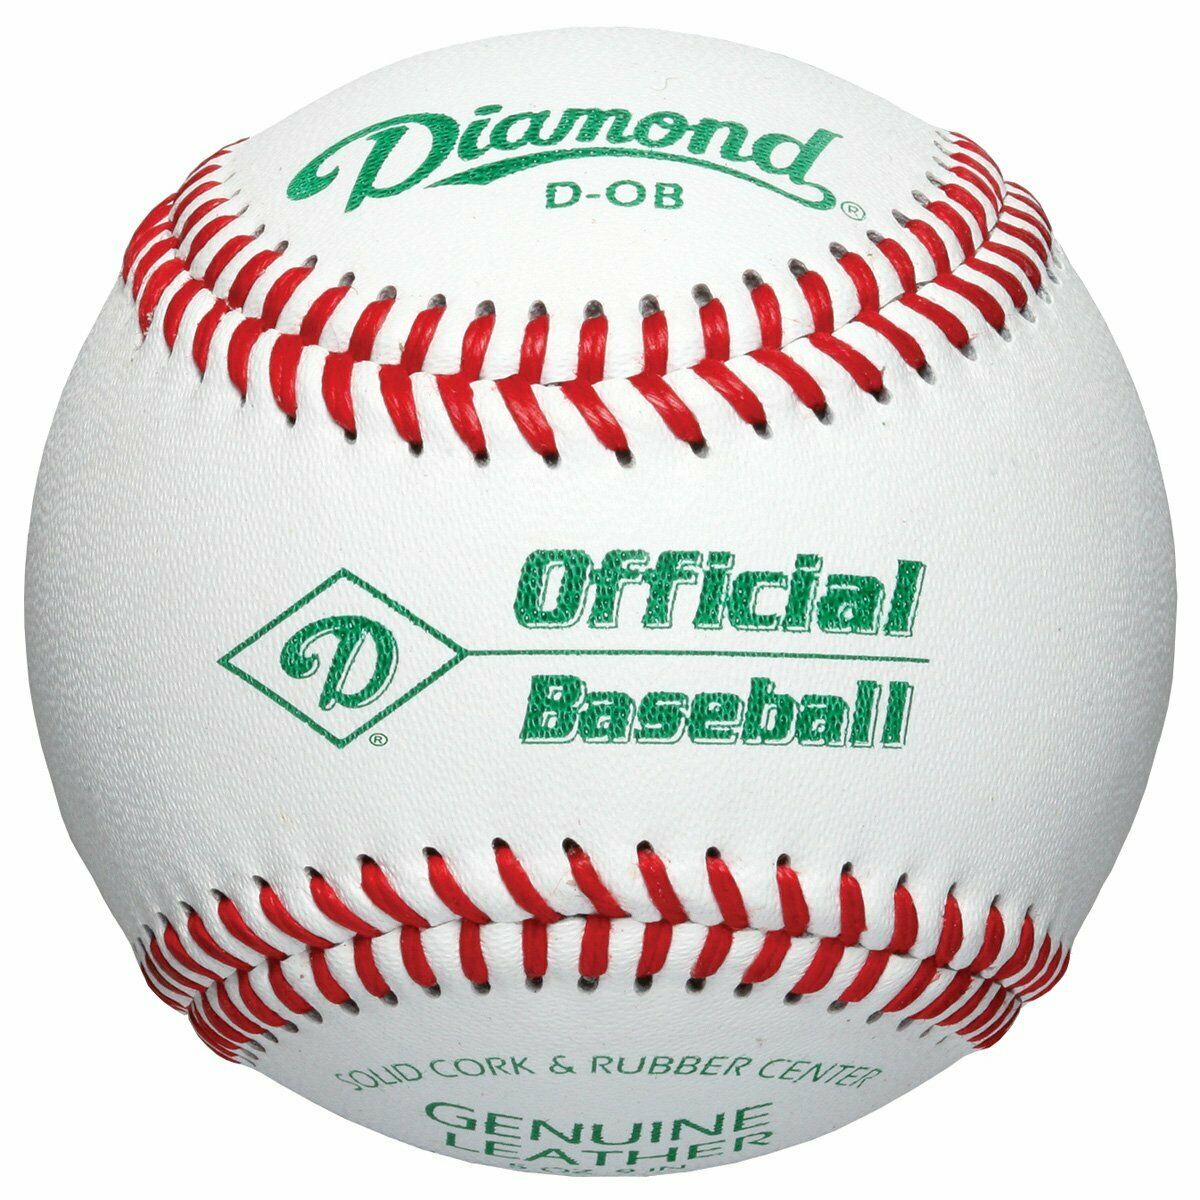 Diamond Sports | D-OB | Official League Diamond Seam Leather | 1 Dozen Balls